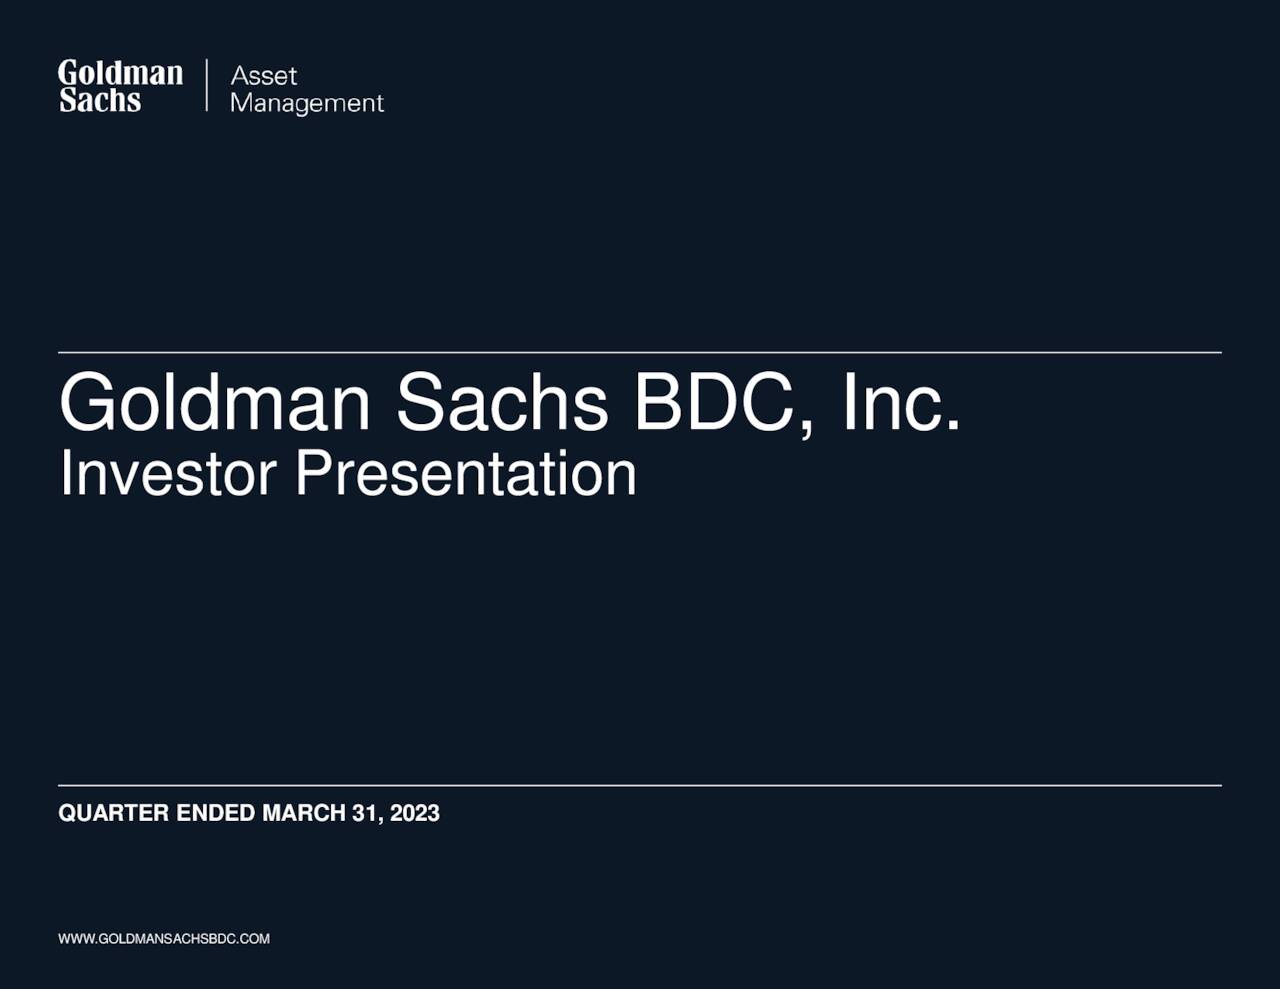 goldman sachs bdc investor presentation